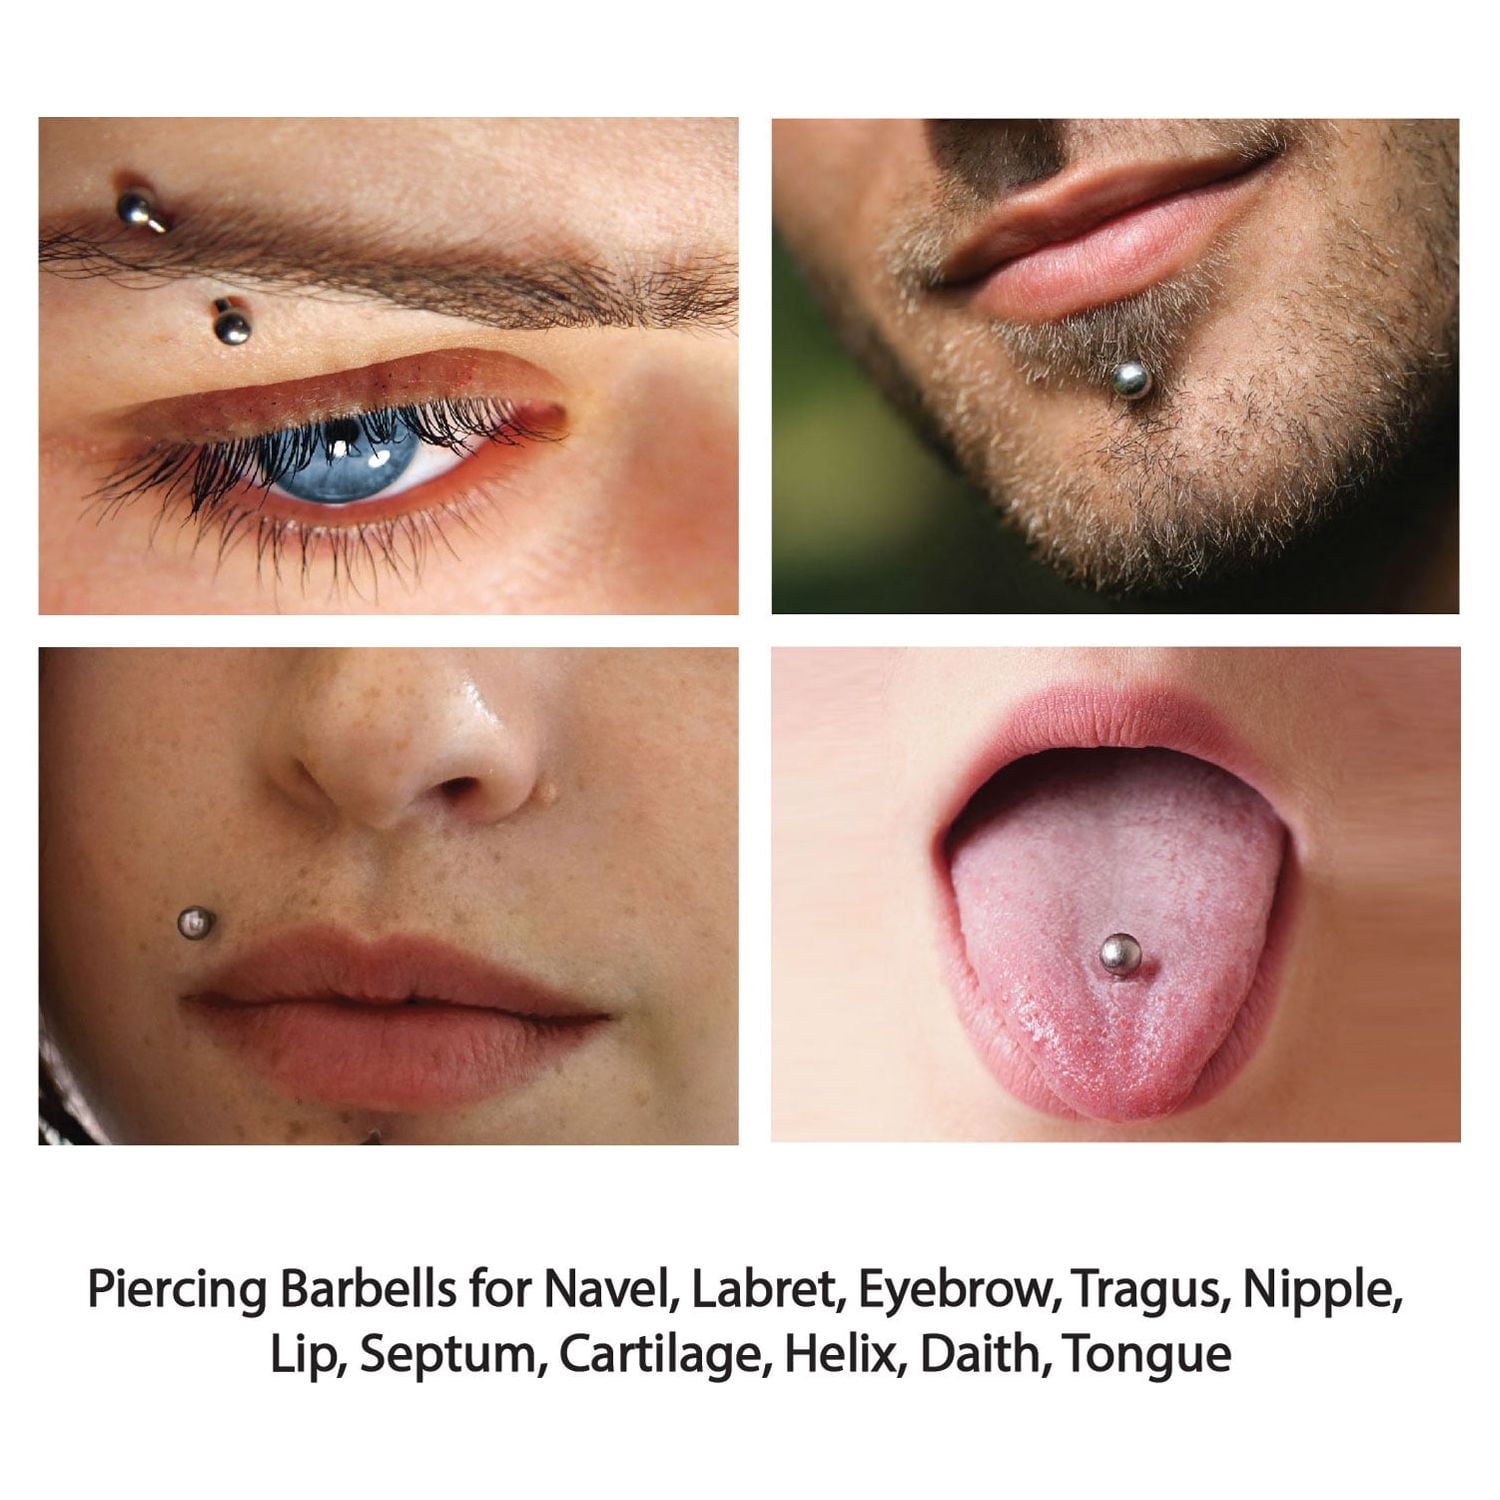 Body Piercing in Miami  Ear, Nose, Septum, Lip & Belly Piercing